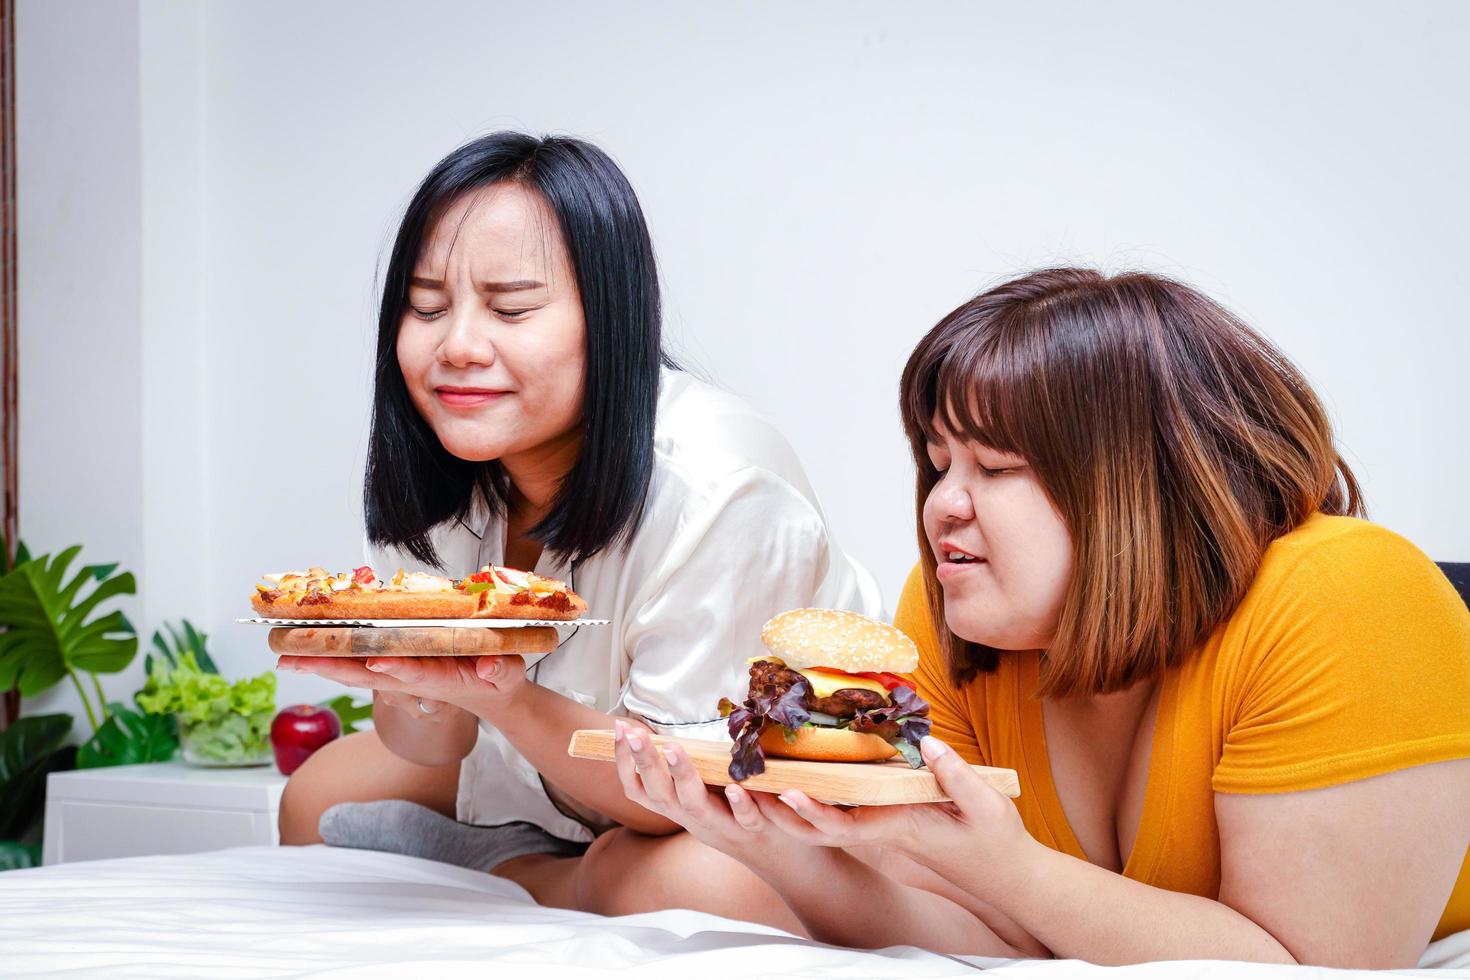 dois gordo meninas comer pizza e hambúrgueres dentro cama dentro a quarto. feliz. a conceito do comendo e saúde Cuidado. foto